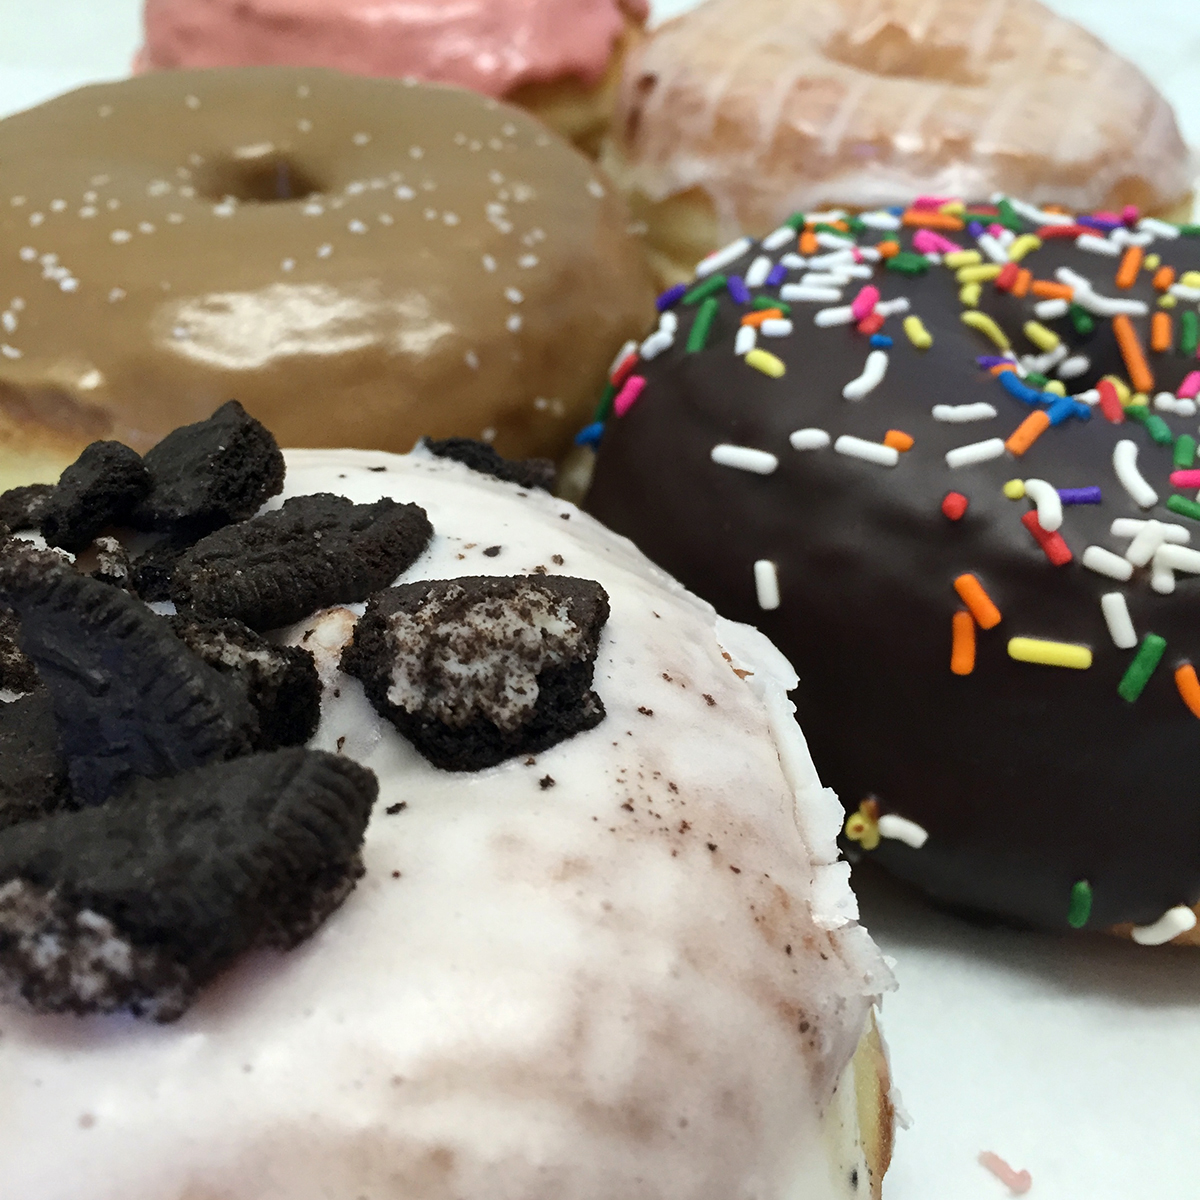 national doughnut day deals boston 2016